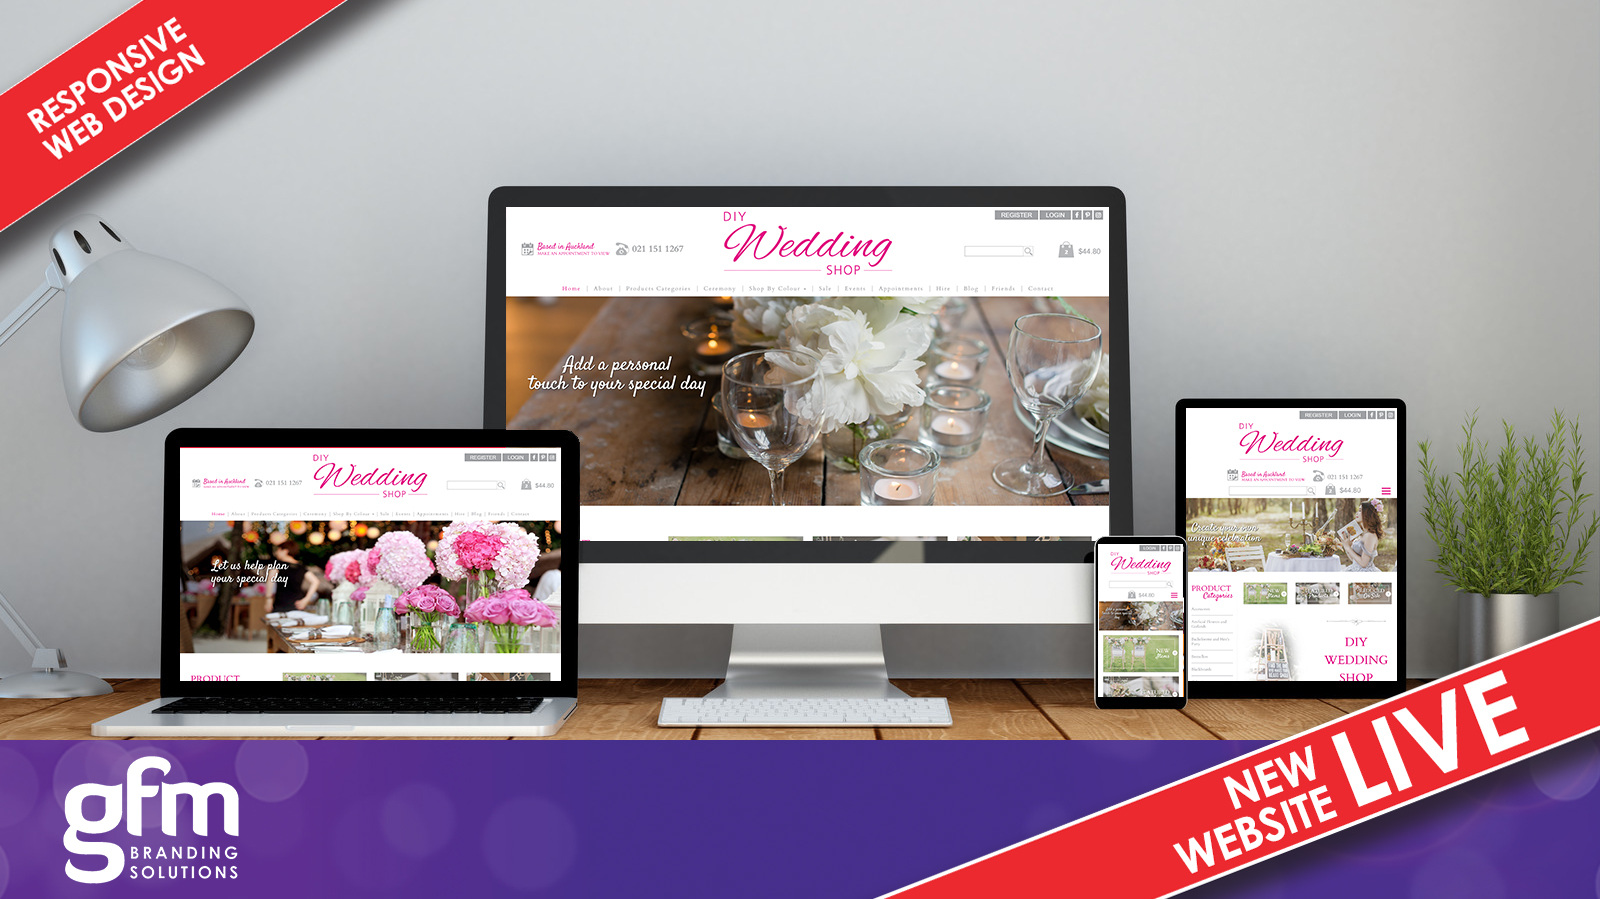 DIY Wedding Shop fully responsive website design on multiple screens